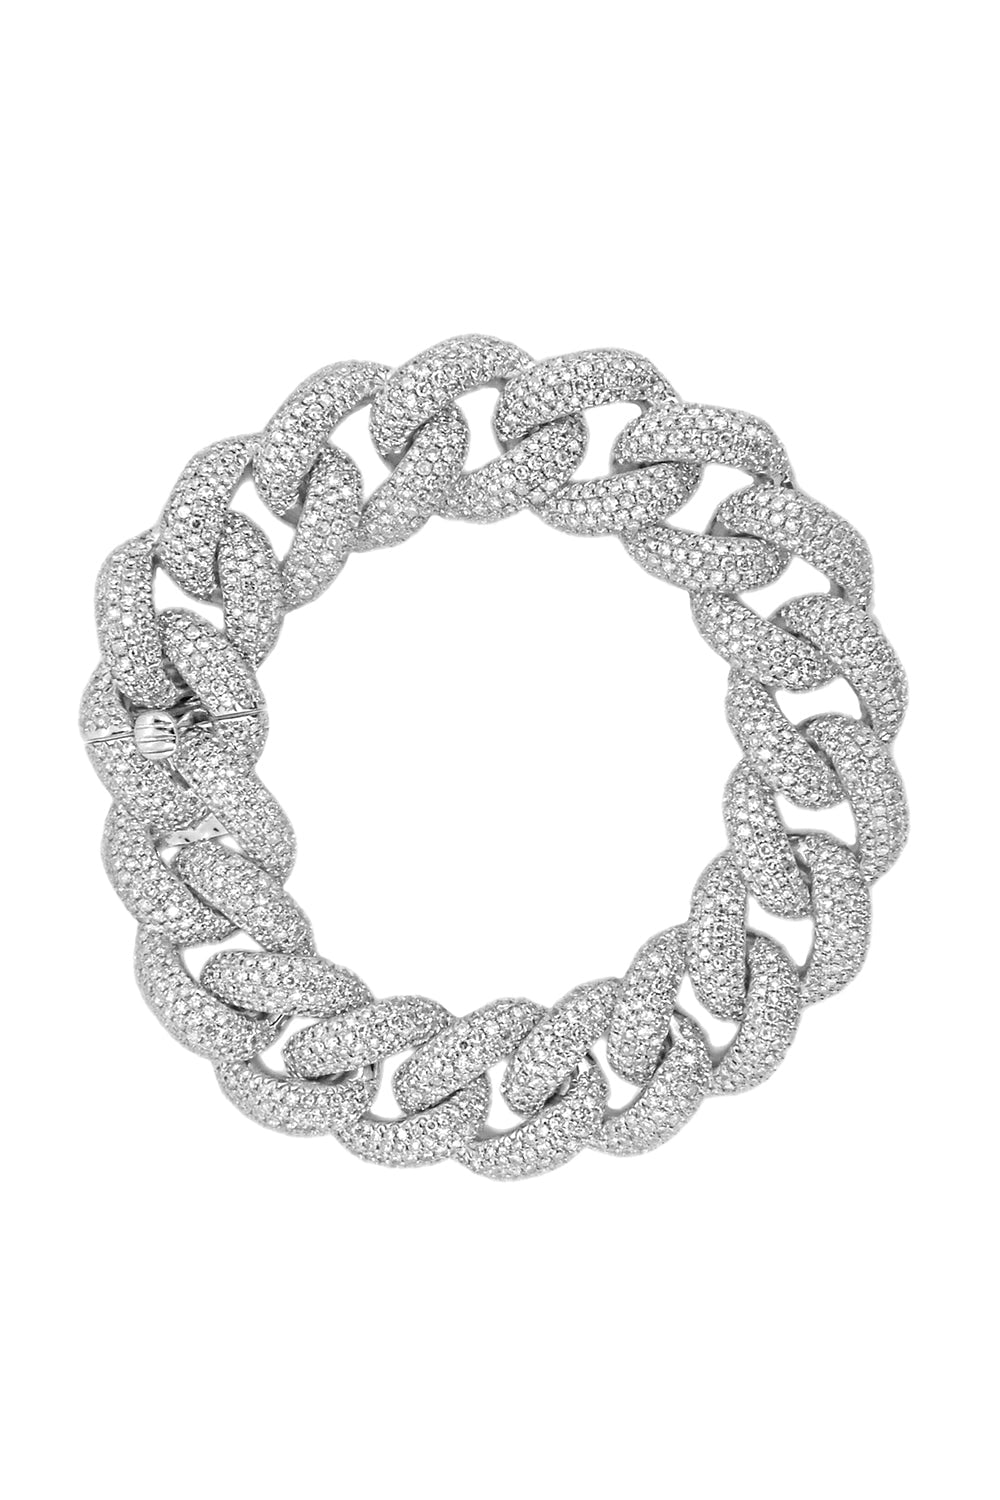 SHAY JEWELRY-Jumbo Pave Diamond Link Bracelet-WHITE GOLD